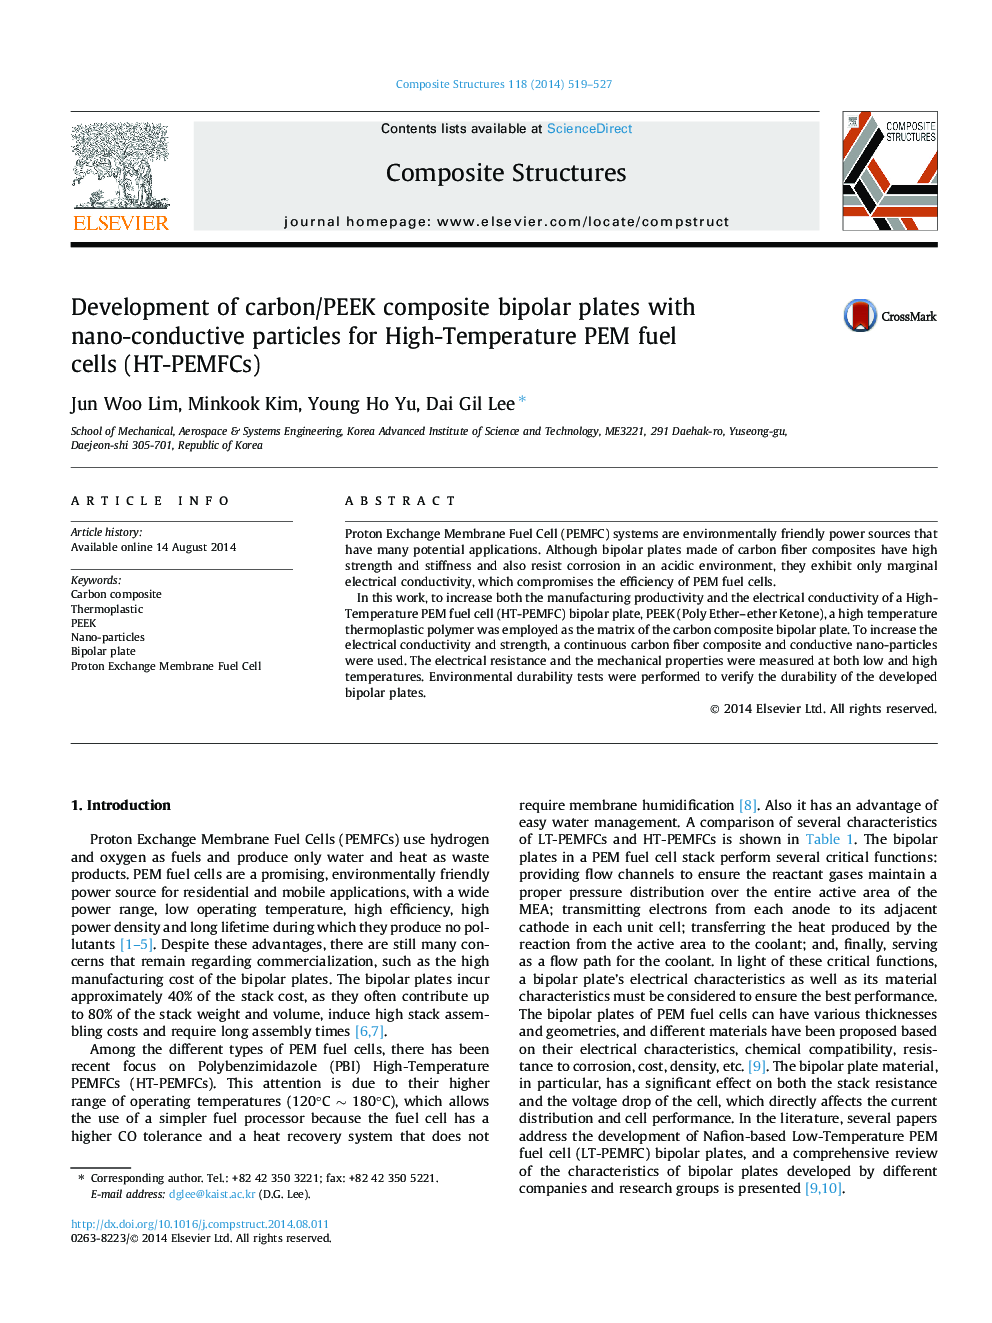 Development of carbon/PEEK composite bipolar plates with nano-conductive particles for High-Temperature PEM fuel cells (HT-PEMFCs)